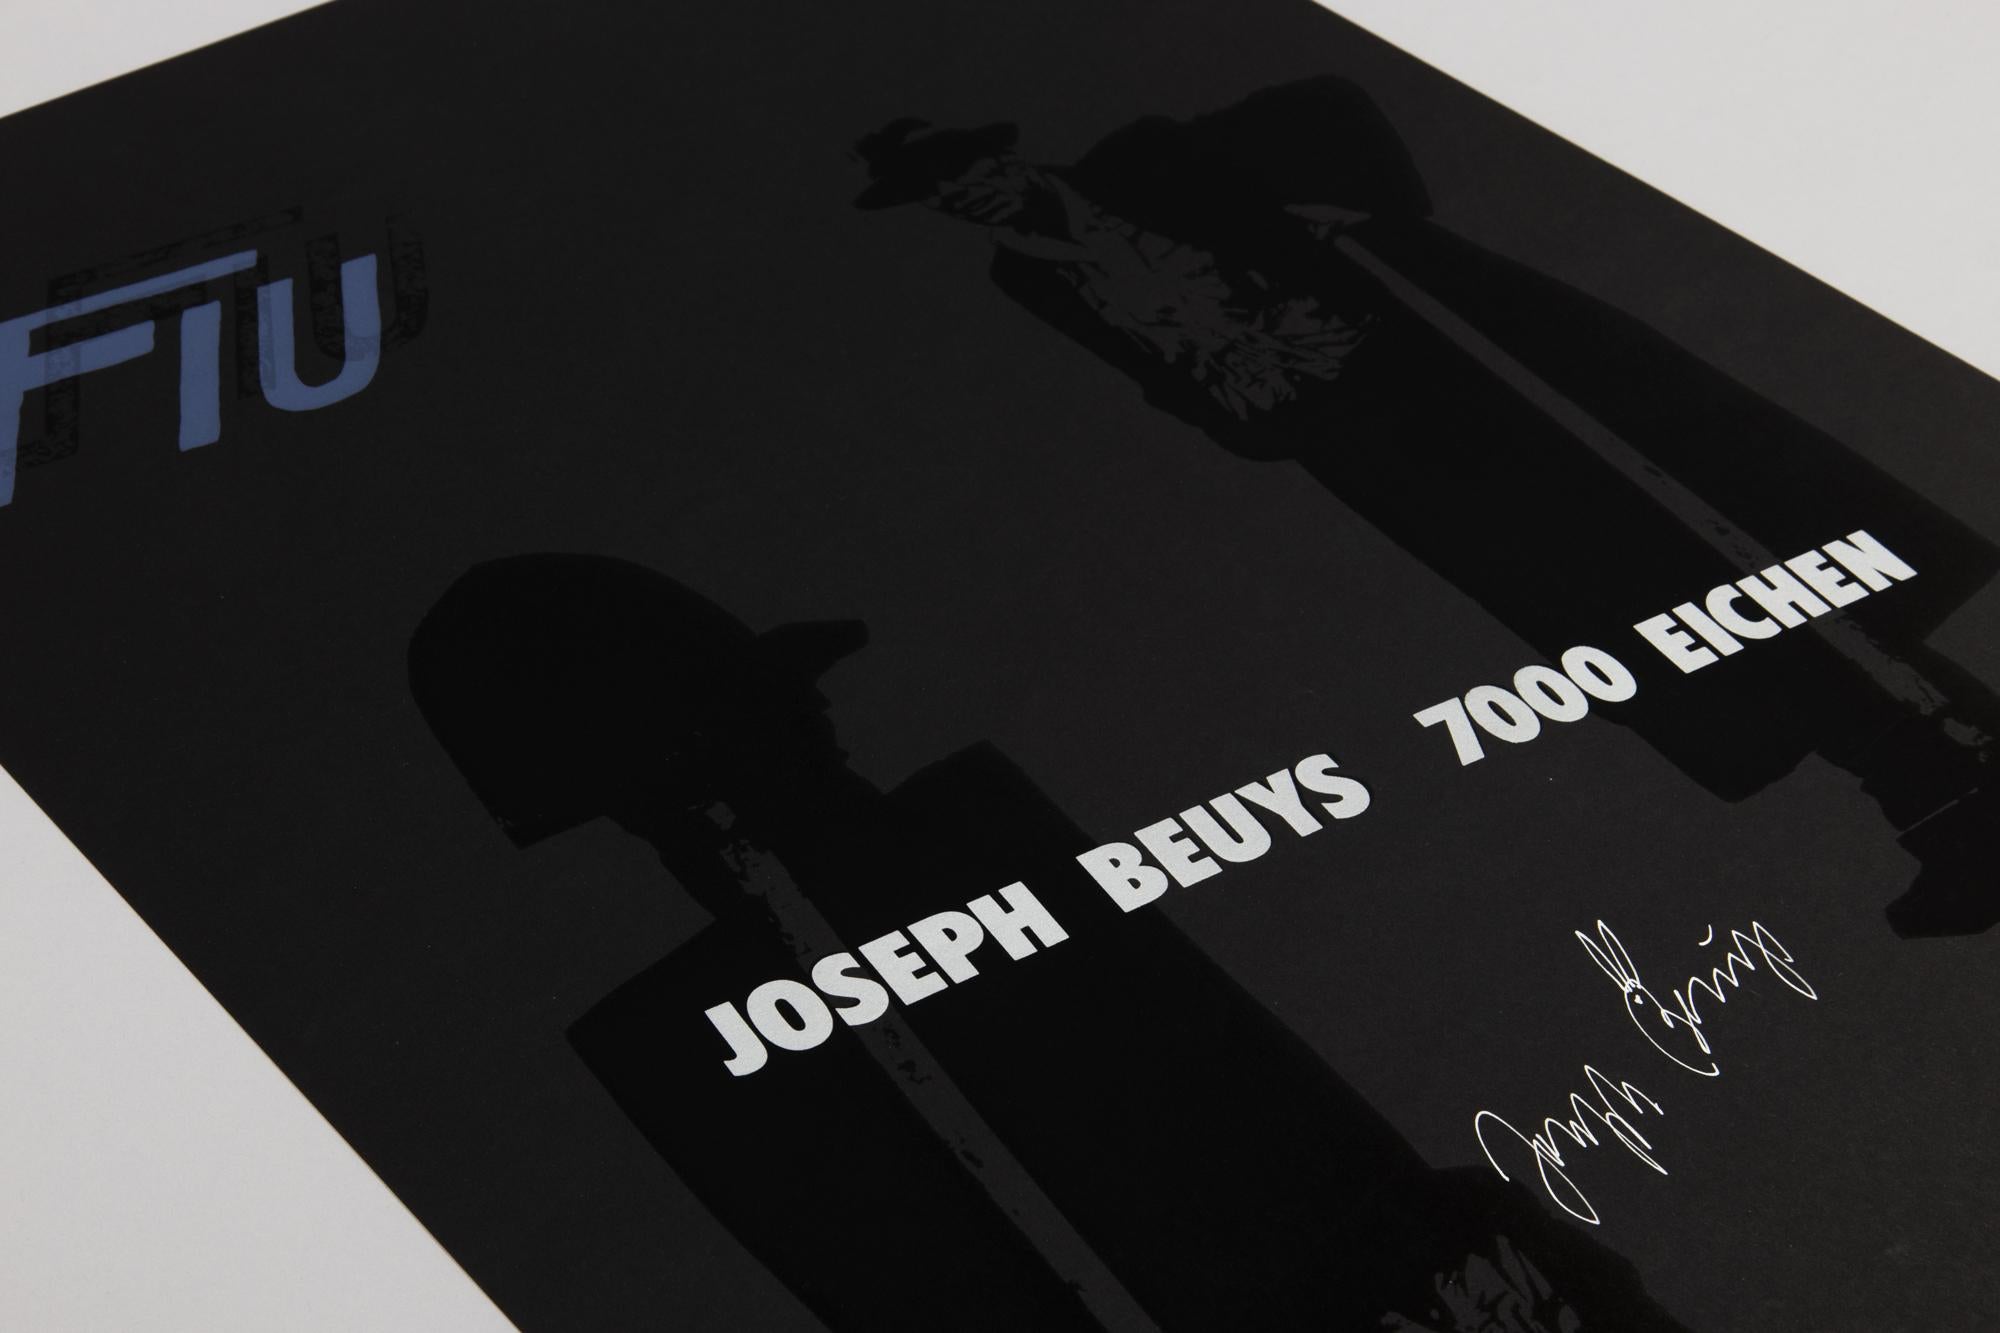 Joseph Beuys, FIU Joseph Beuys, 7000 Eichen - Signed Screenprint from 1982 1